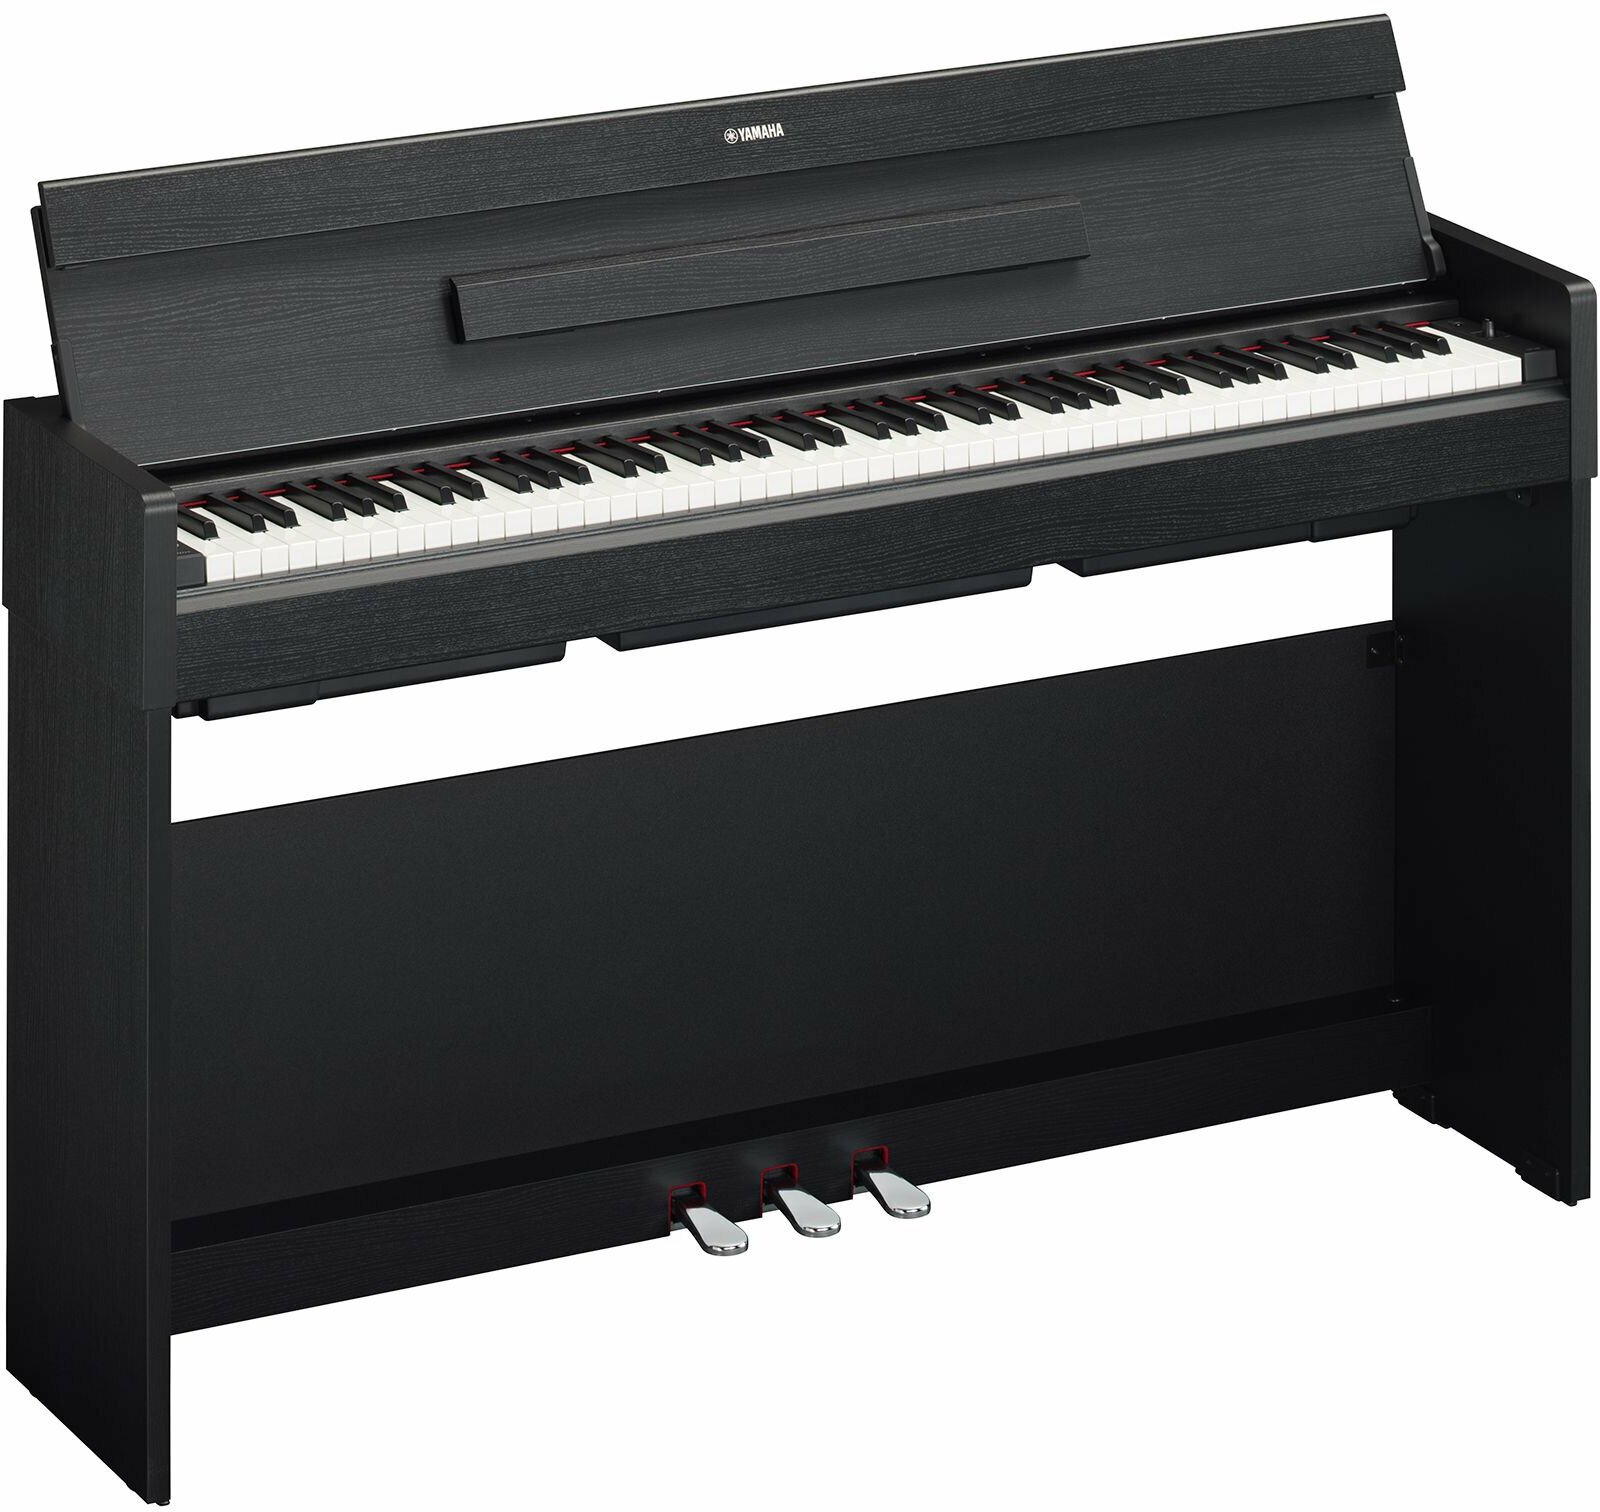 Piano digital Yamaha YDP-S35 Black Piano digital